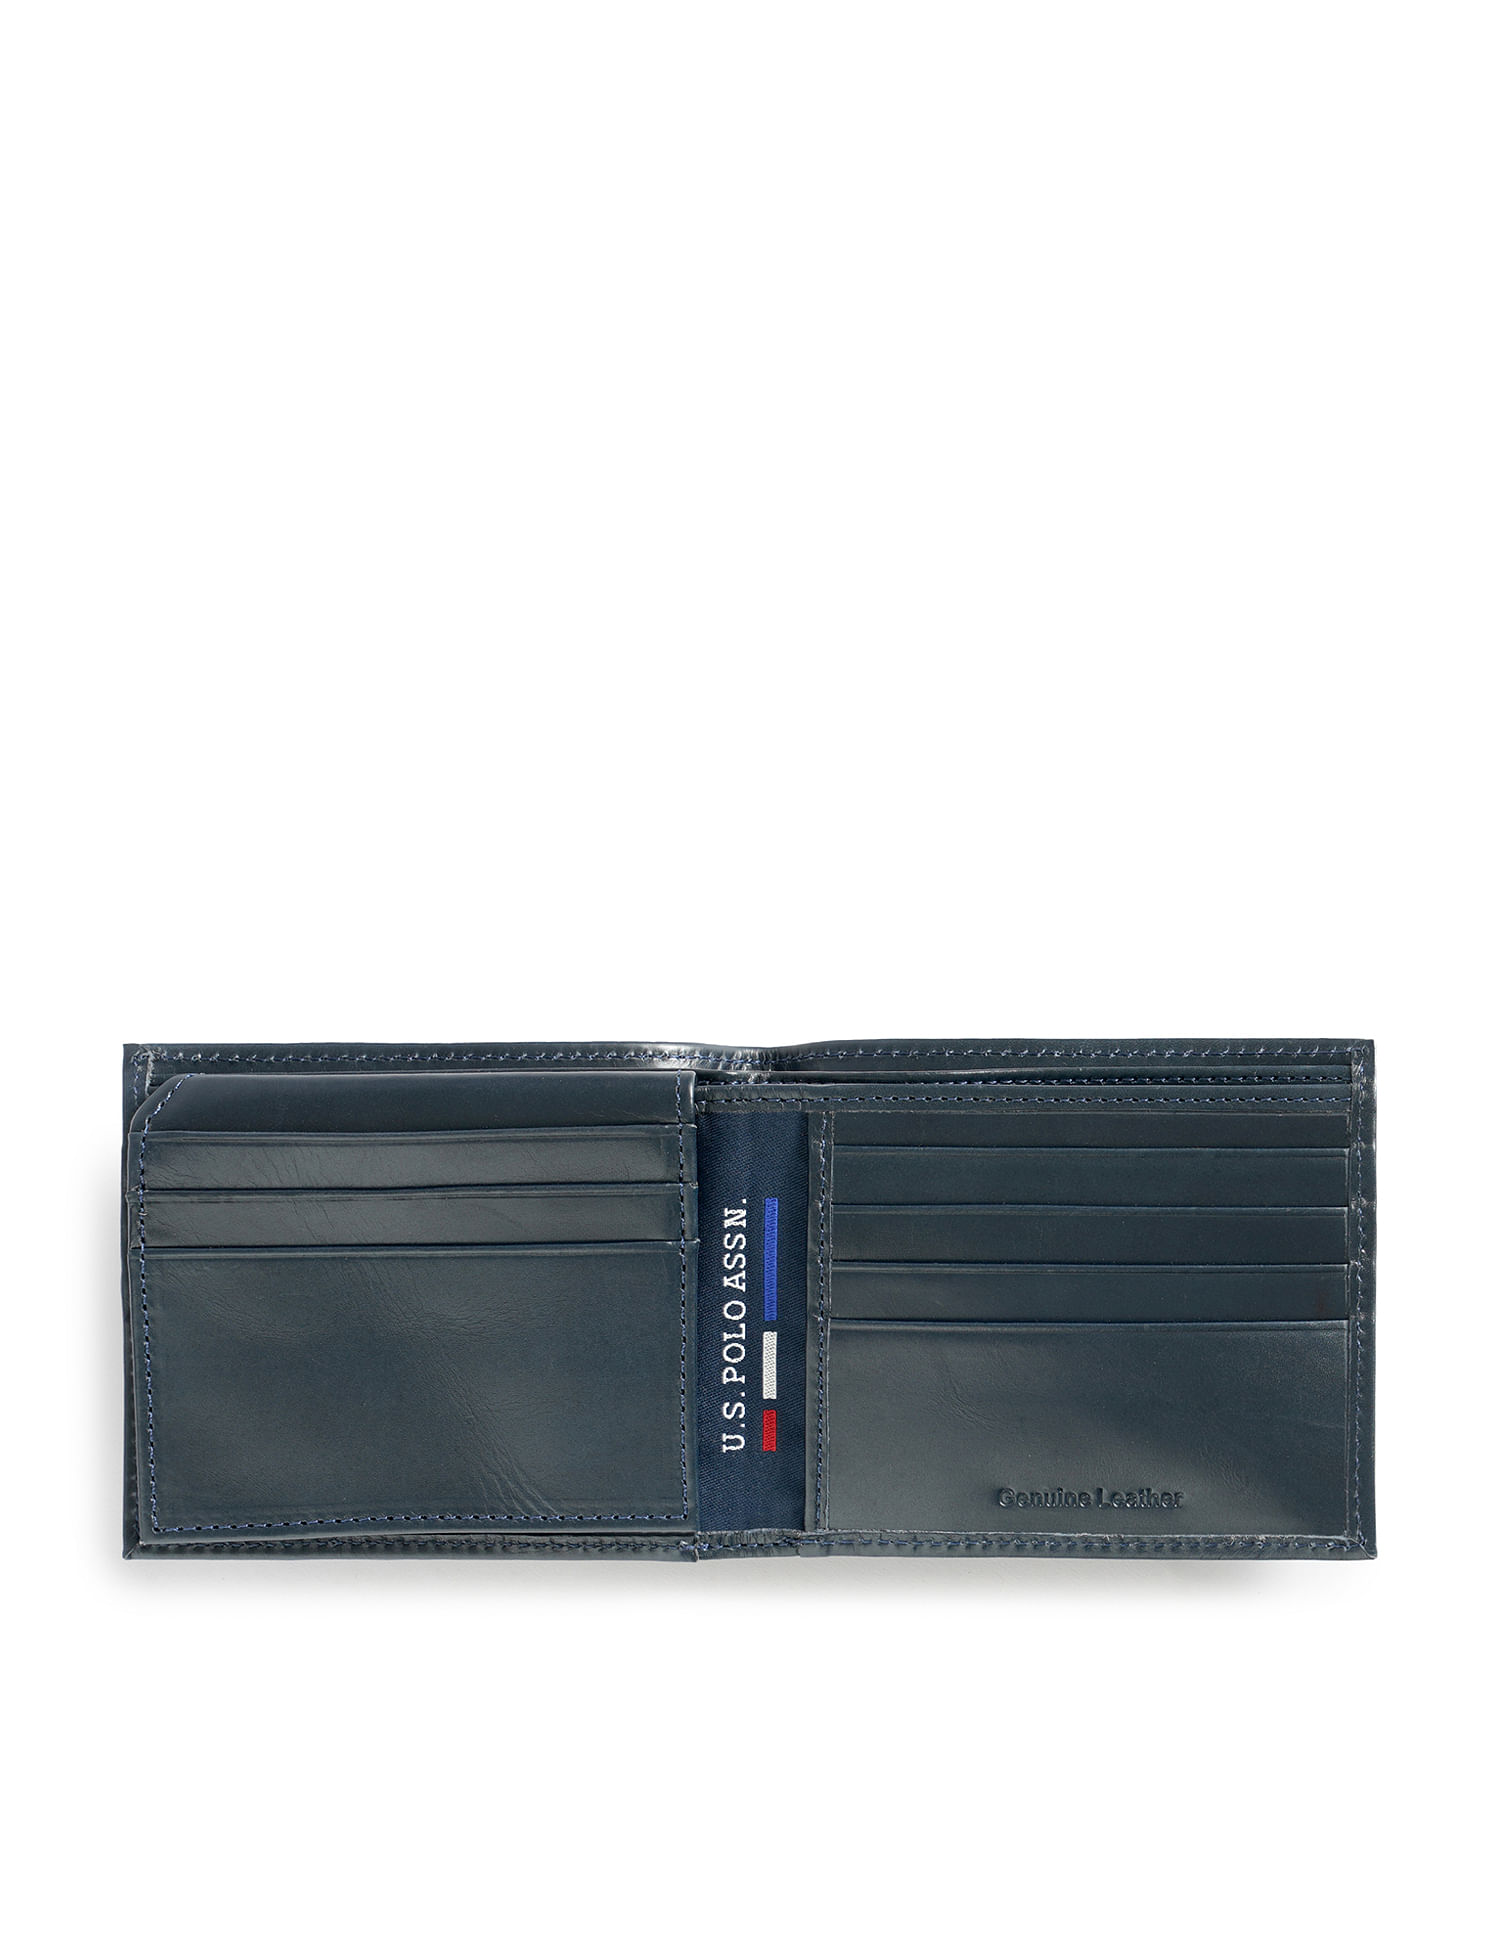 U.S. POLO ASSN. Large Flap Wallet